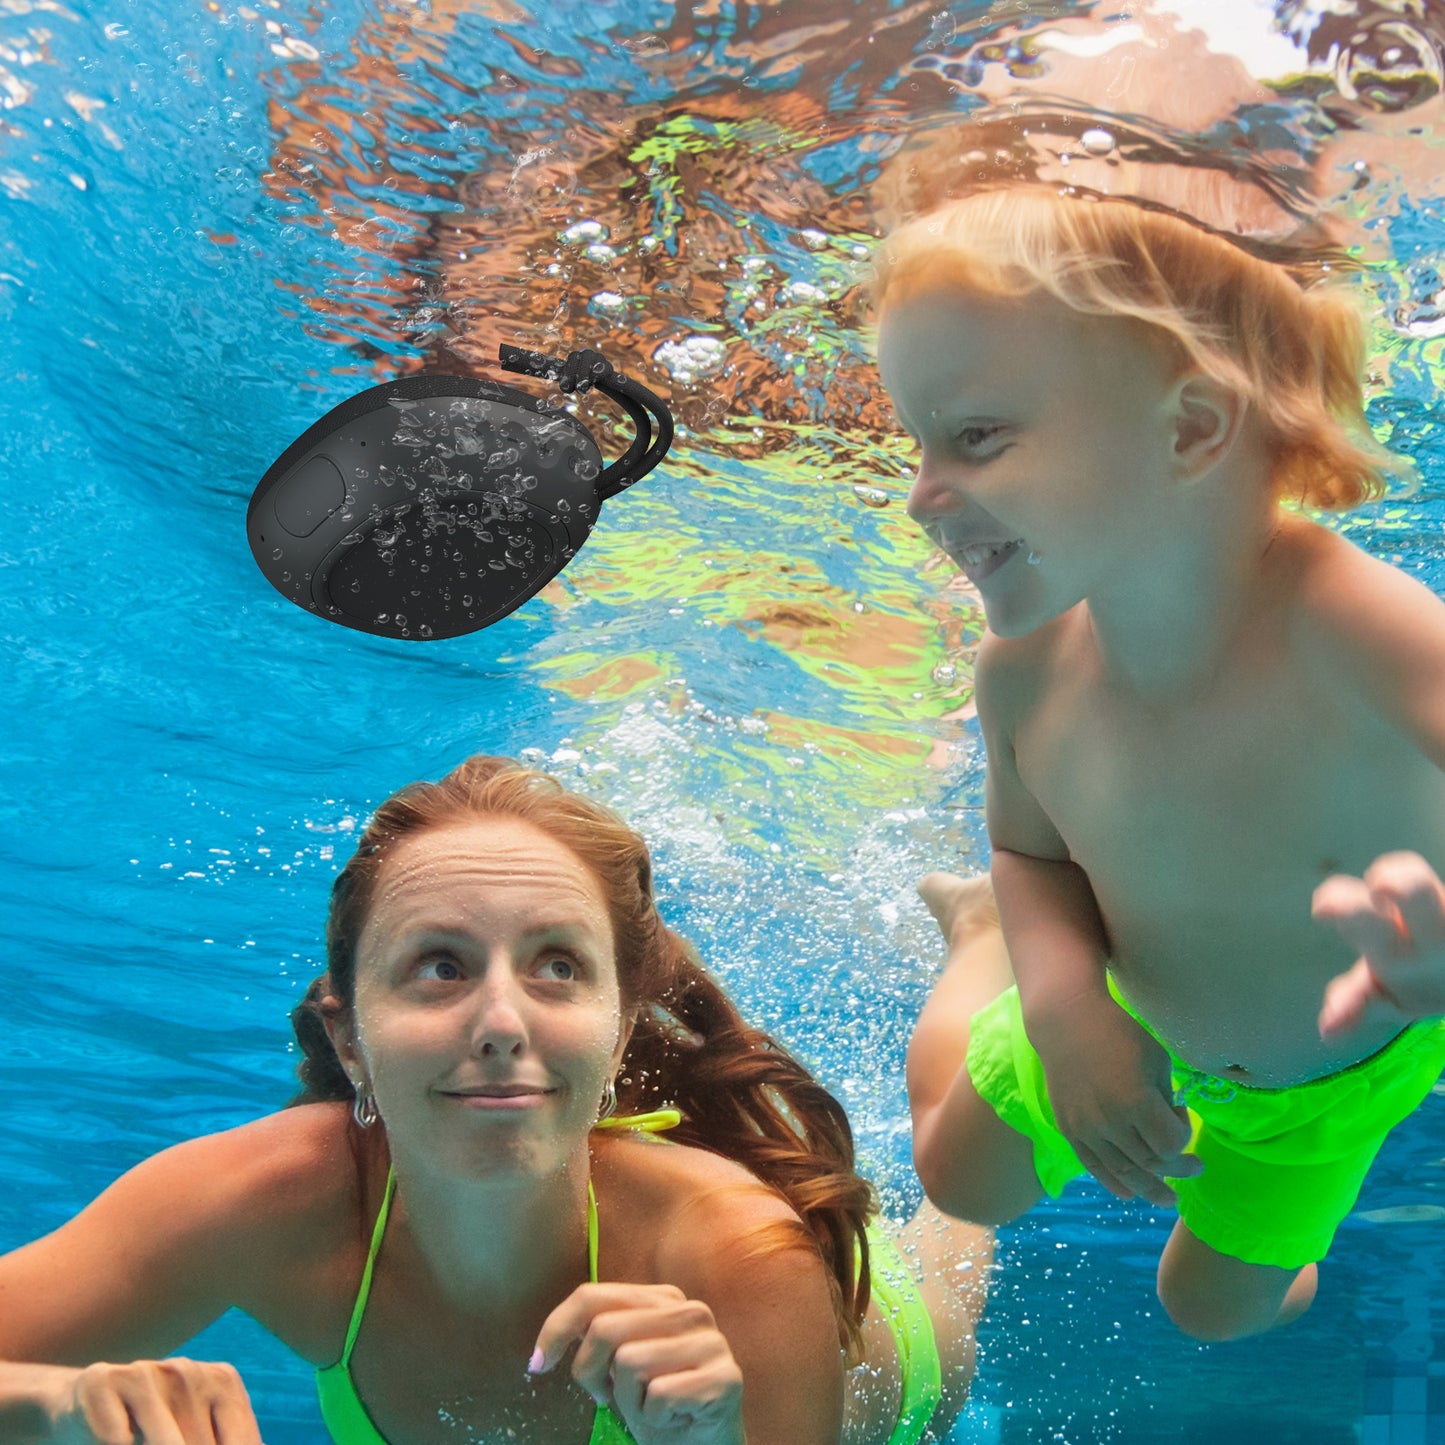 FitSmart Waterproof Bluetooth Speaker Portable Wireless Stereo Sound